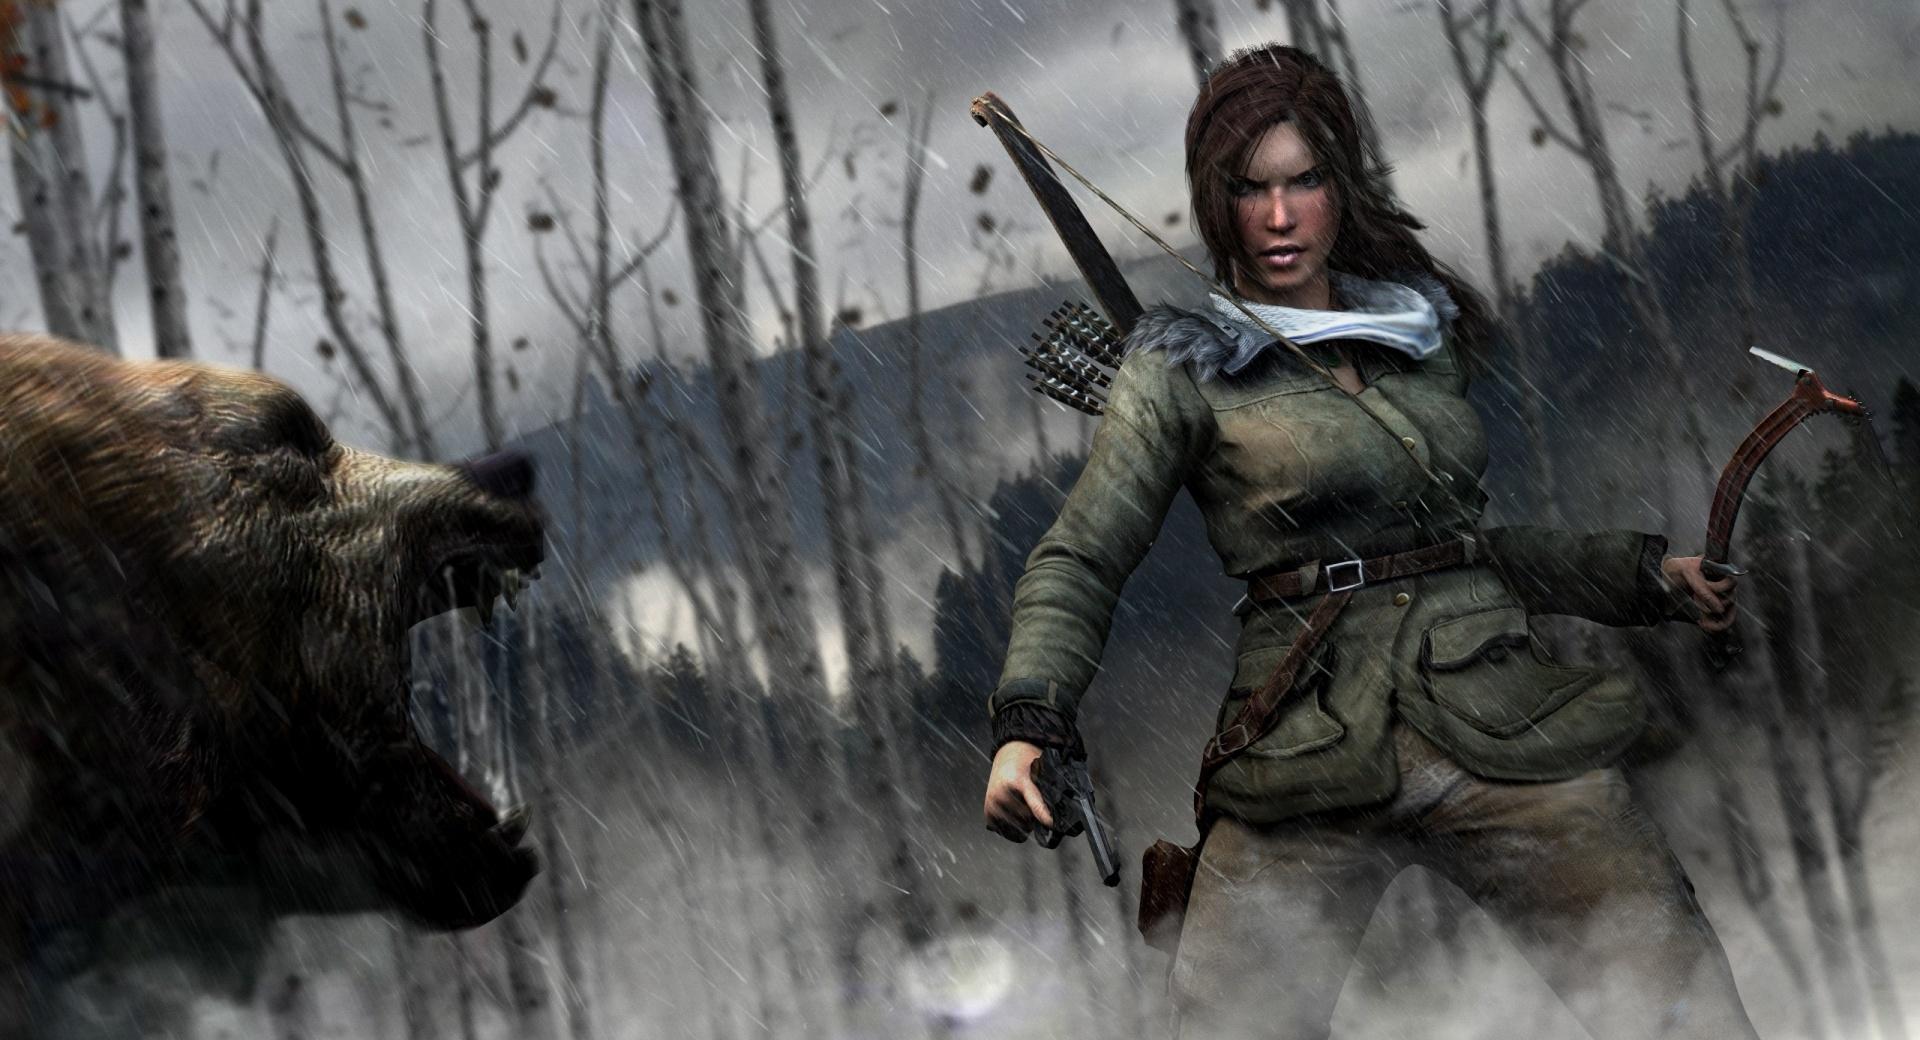 Rise of the Tomb Raider Lara Croft vs Bear at 1024 x 1024 iPad size wallpapers HD quality